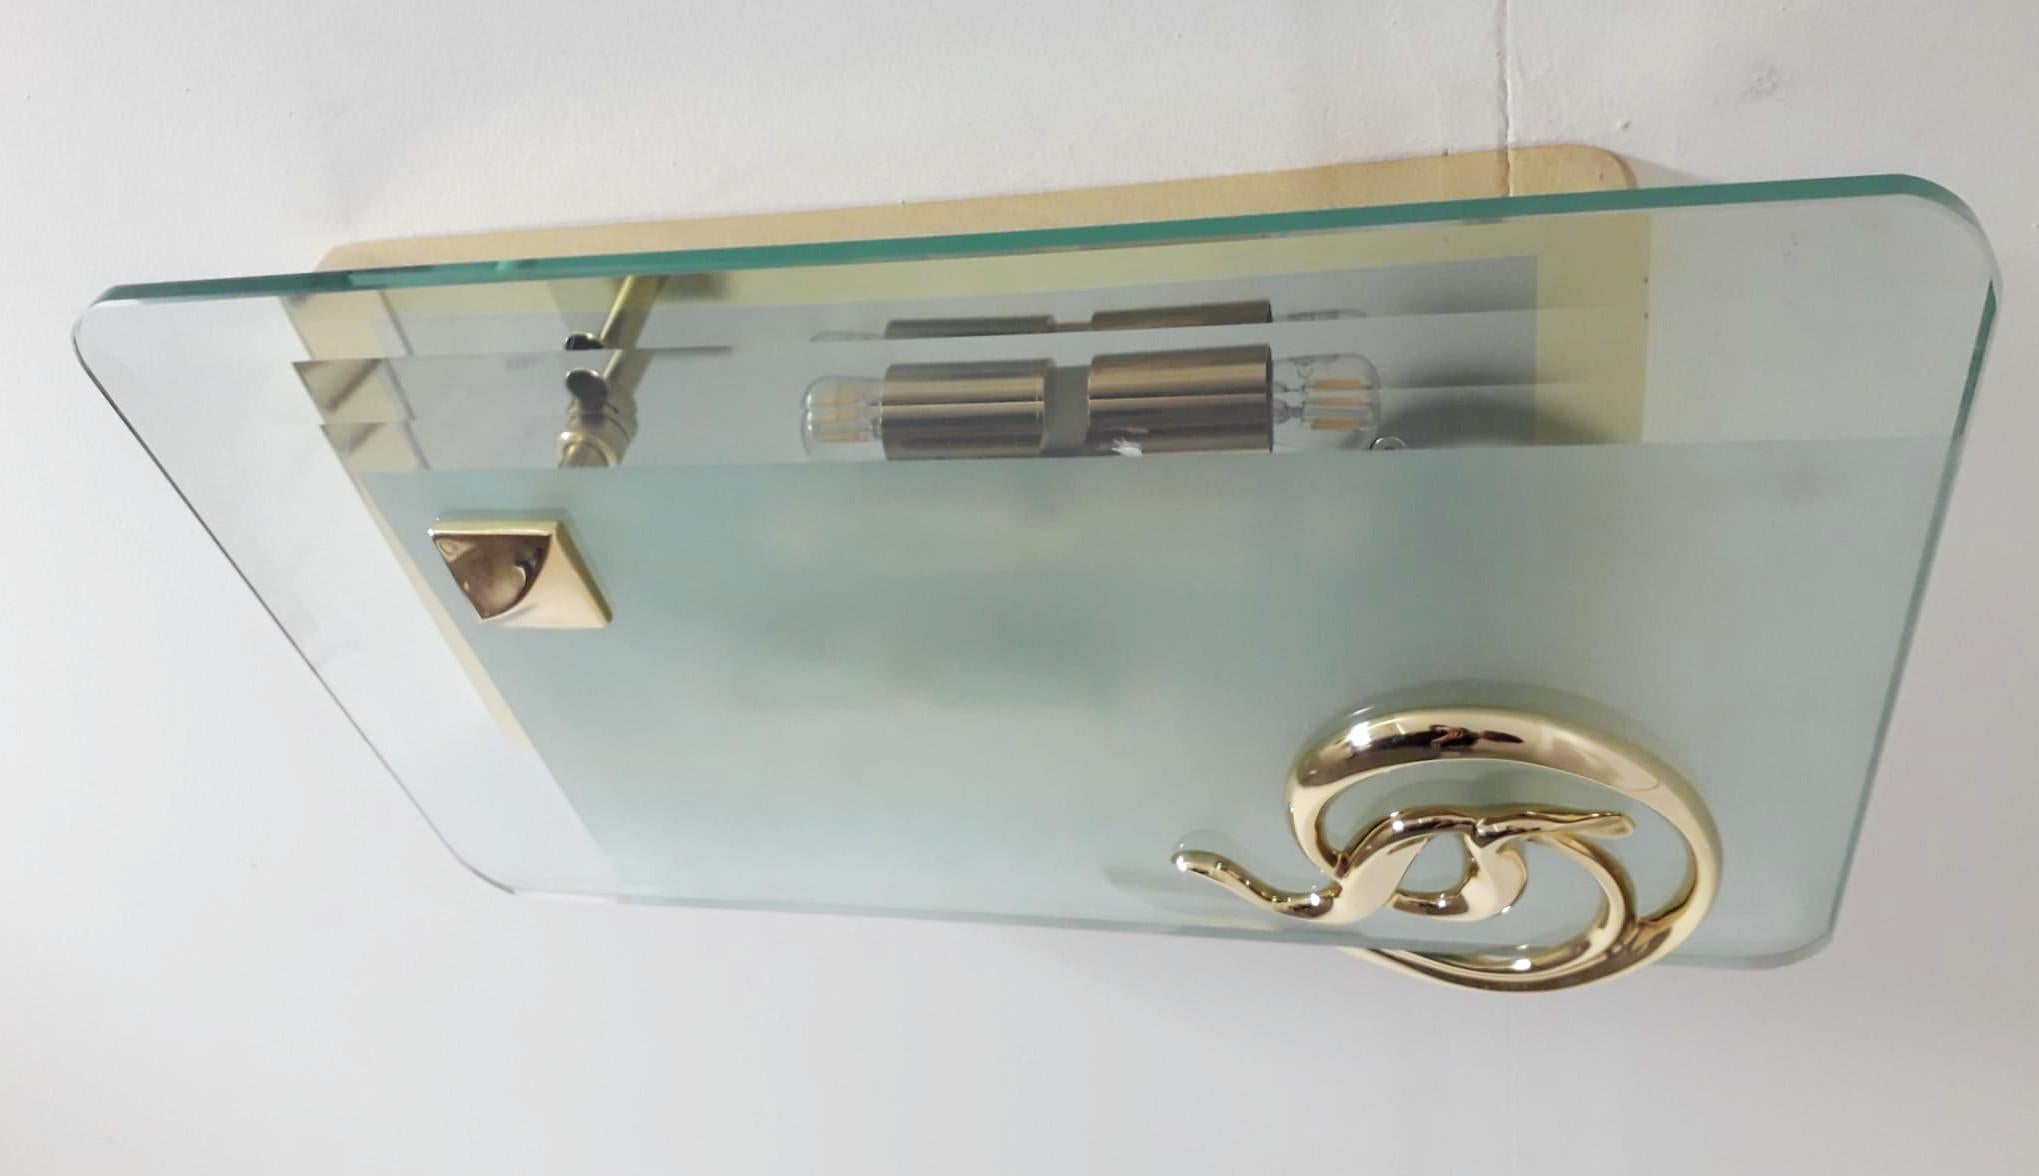 Art Deco Beveled Sconce / Flushmount by Fratelli Martini - 3 available 1